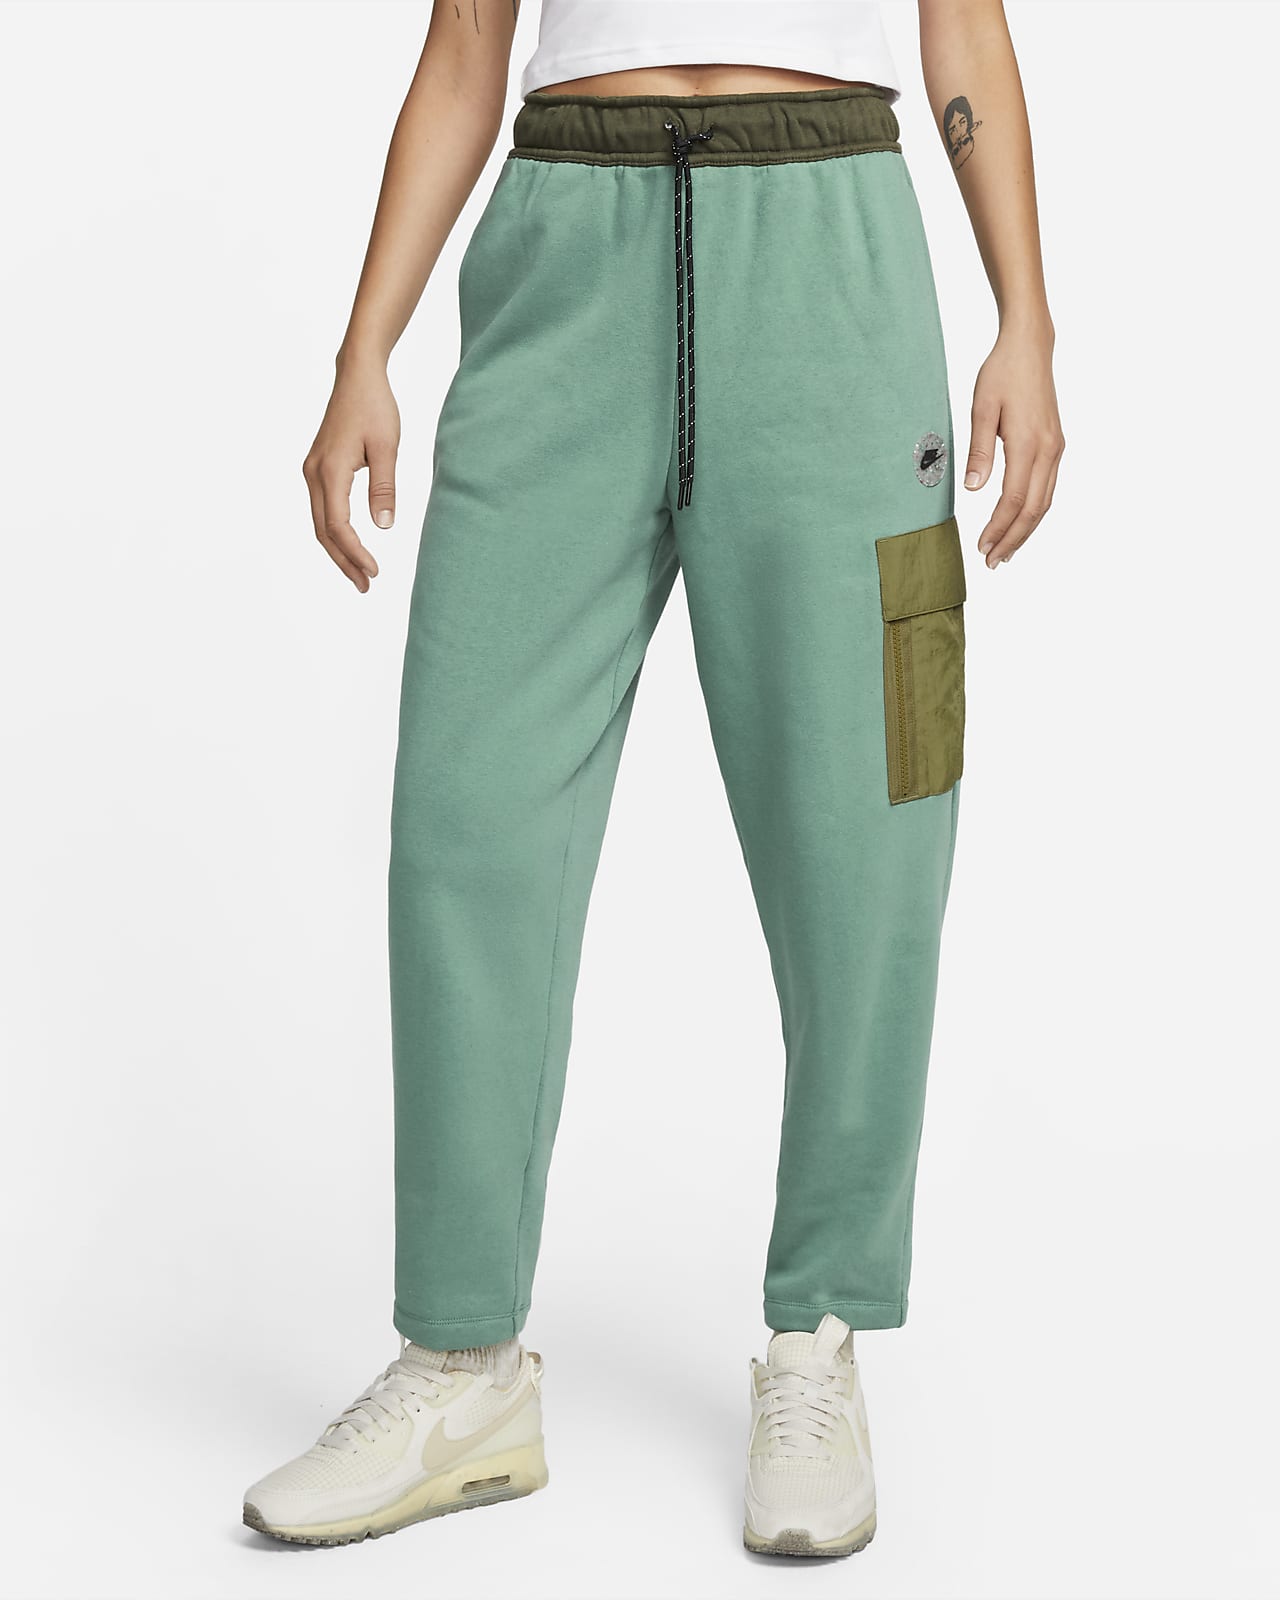 Pantalones cargo de tejido Fleece funcionales deportivos para mujer Nike Nike.com